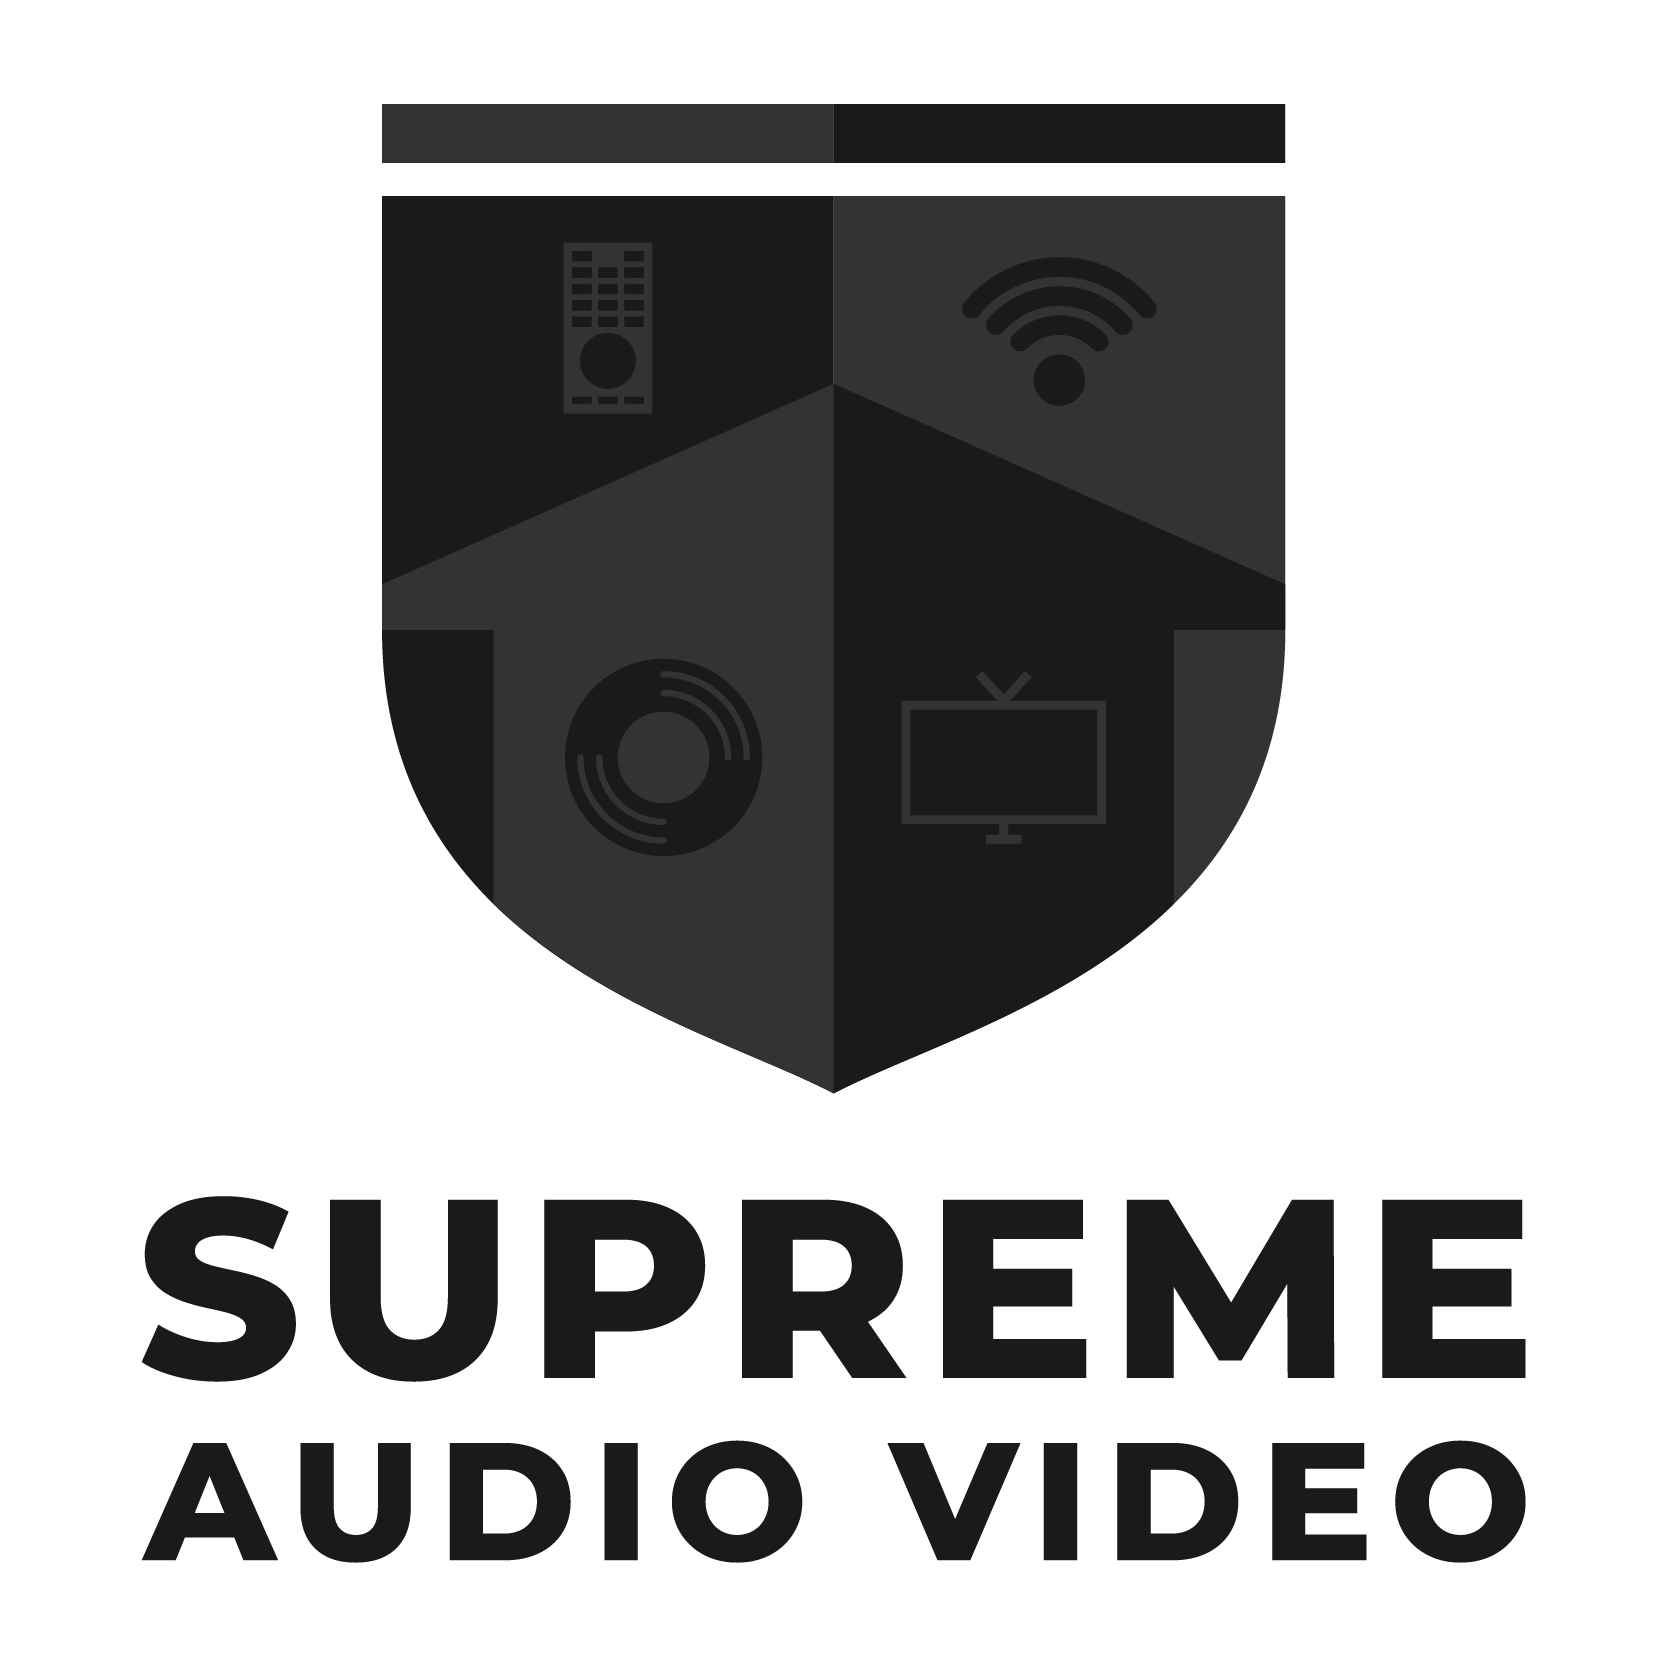 Supreme Audio Video Logo